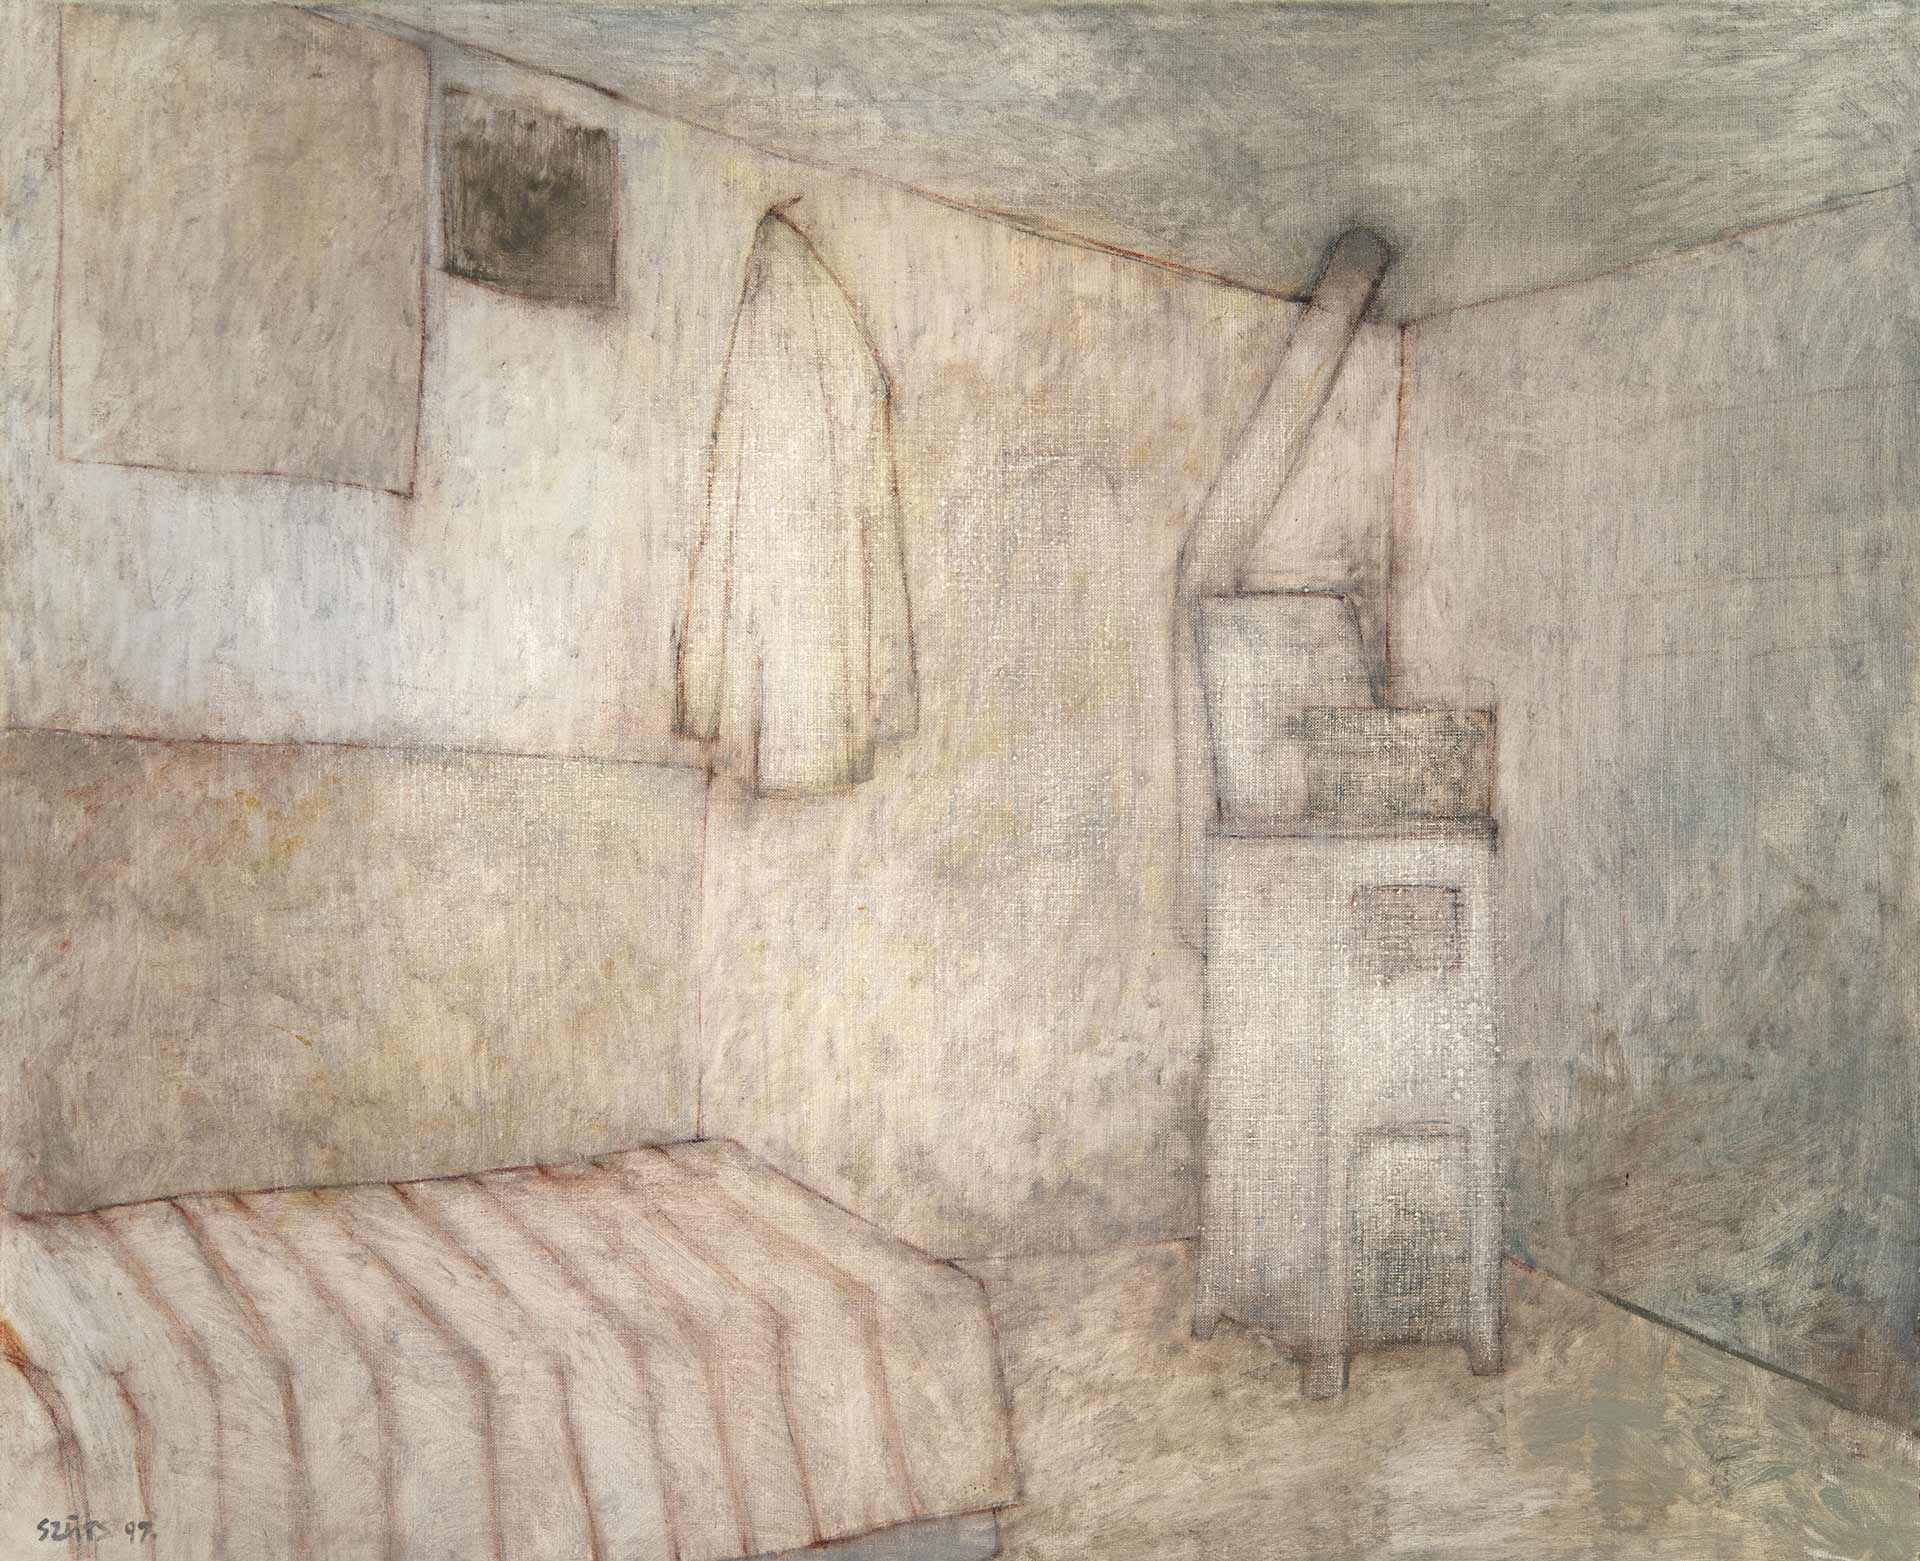 Szüts Miklós (1945) Room with White Stool, 1997